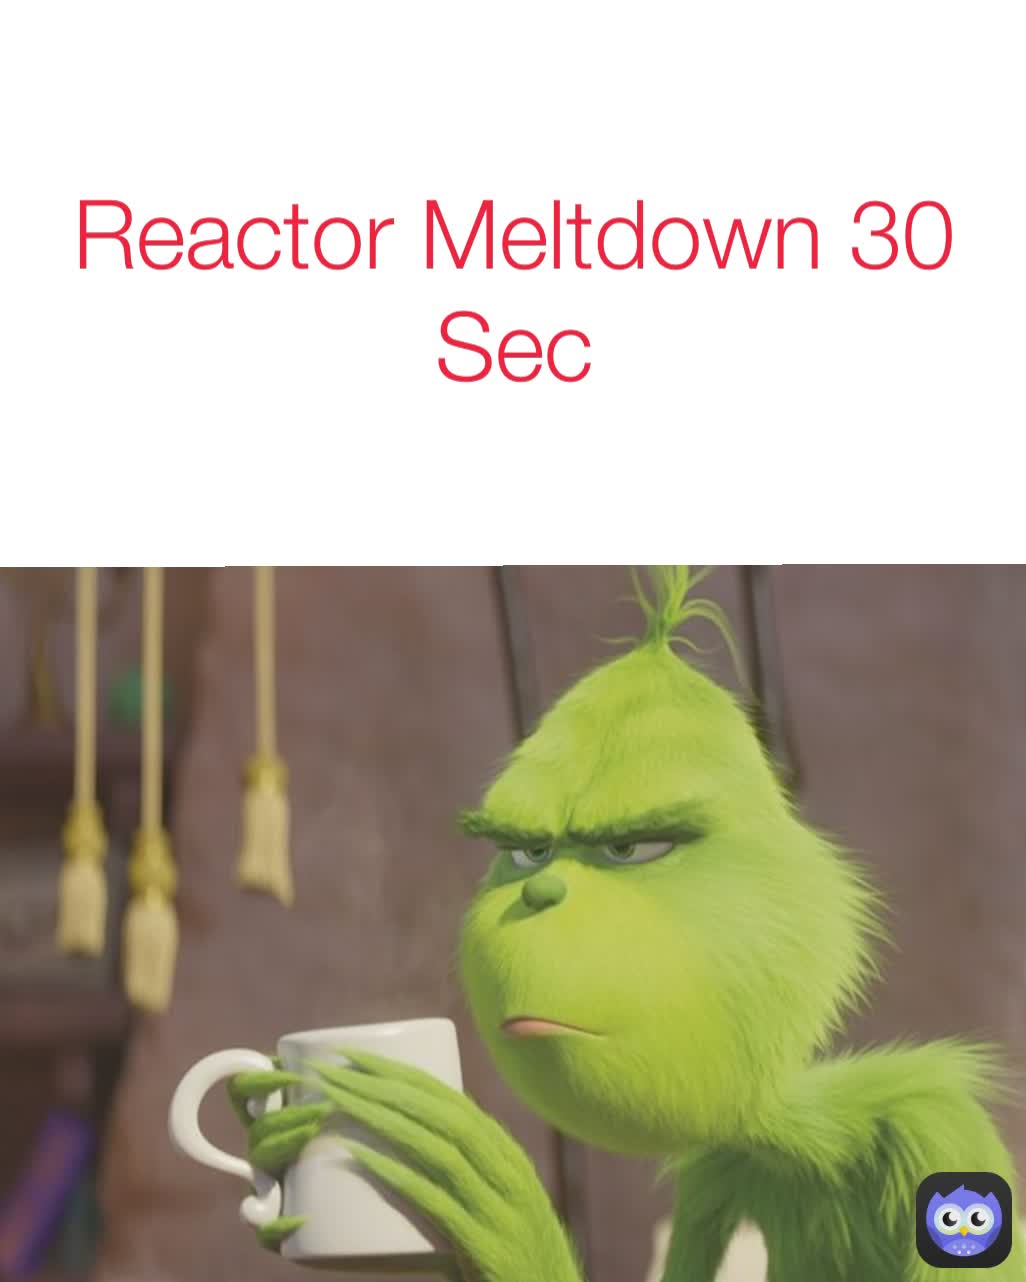 Reactor Meltdown 30 Sec